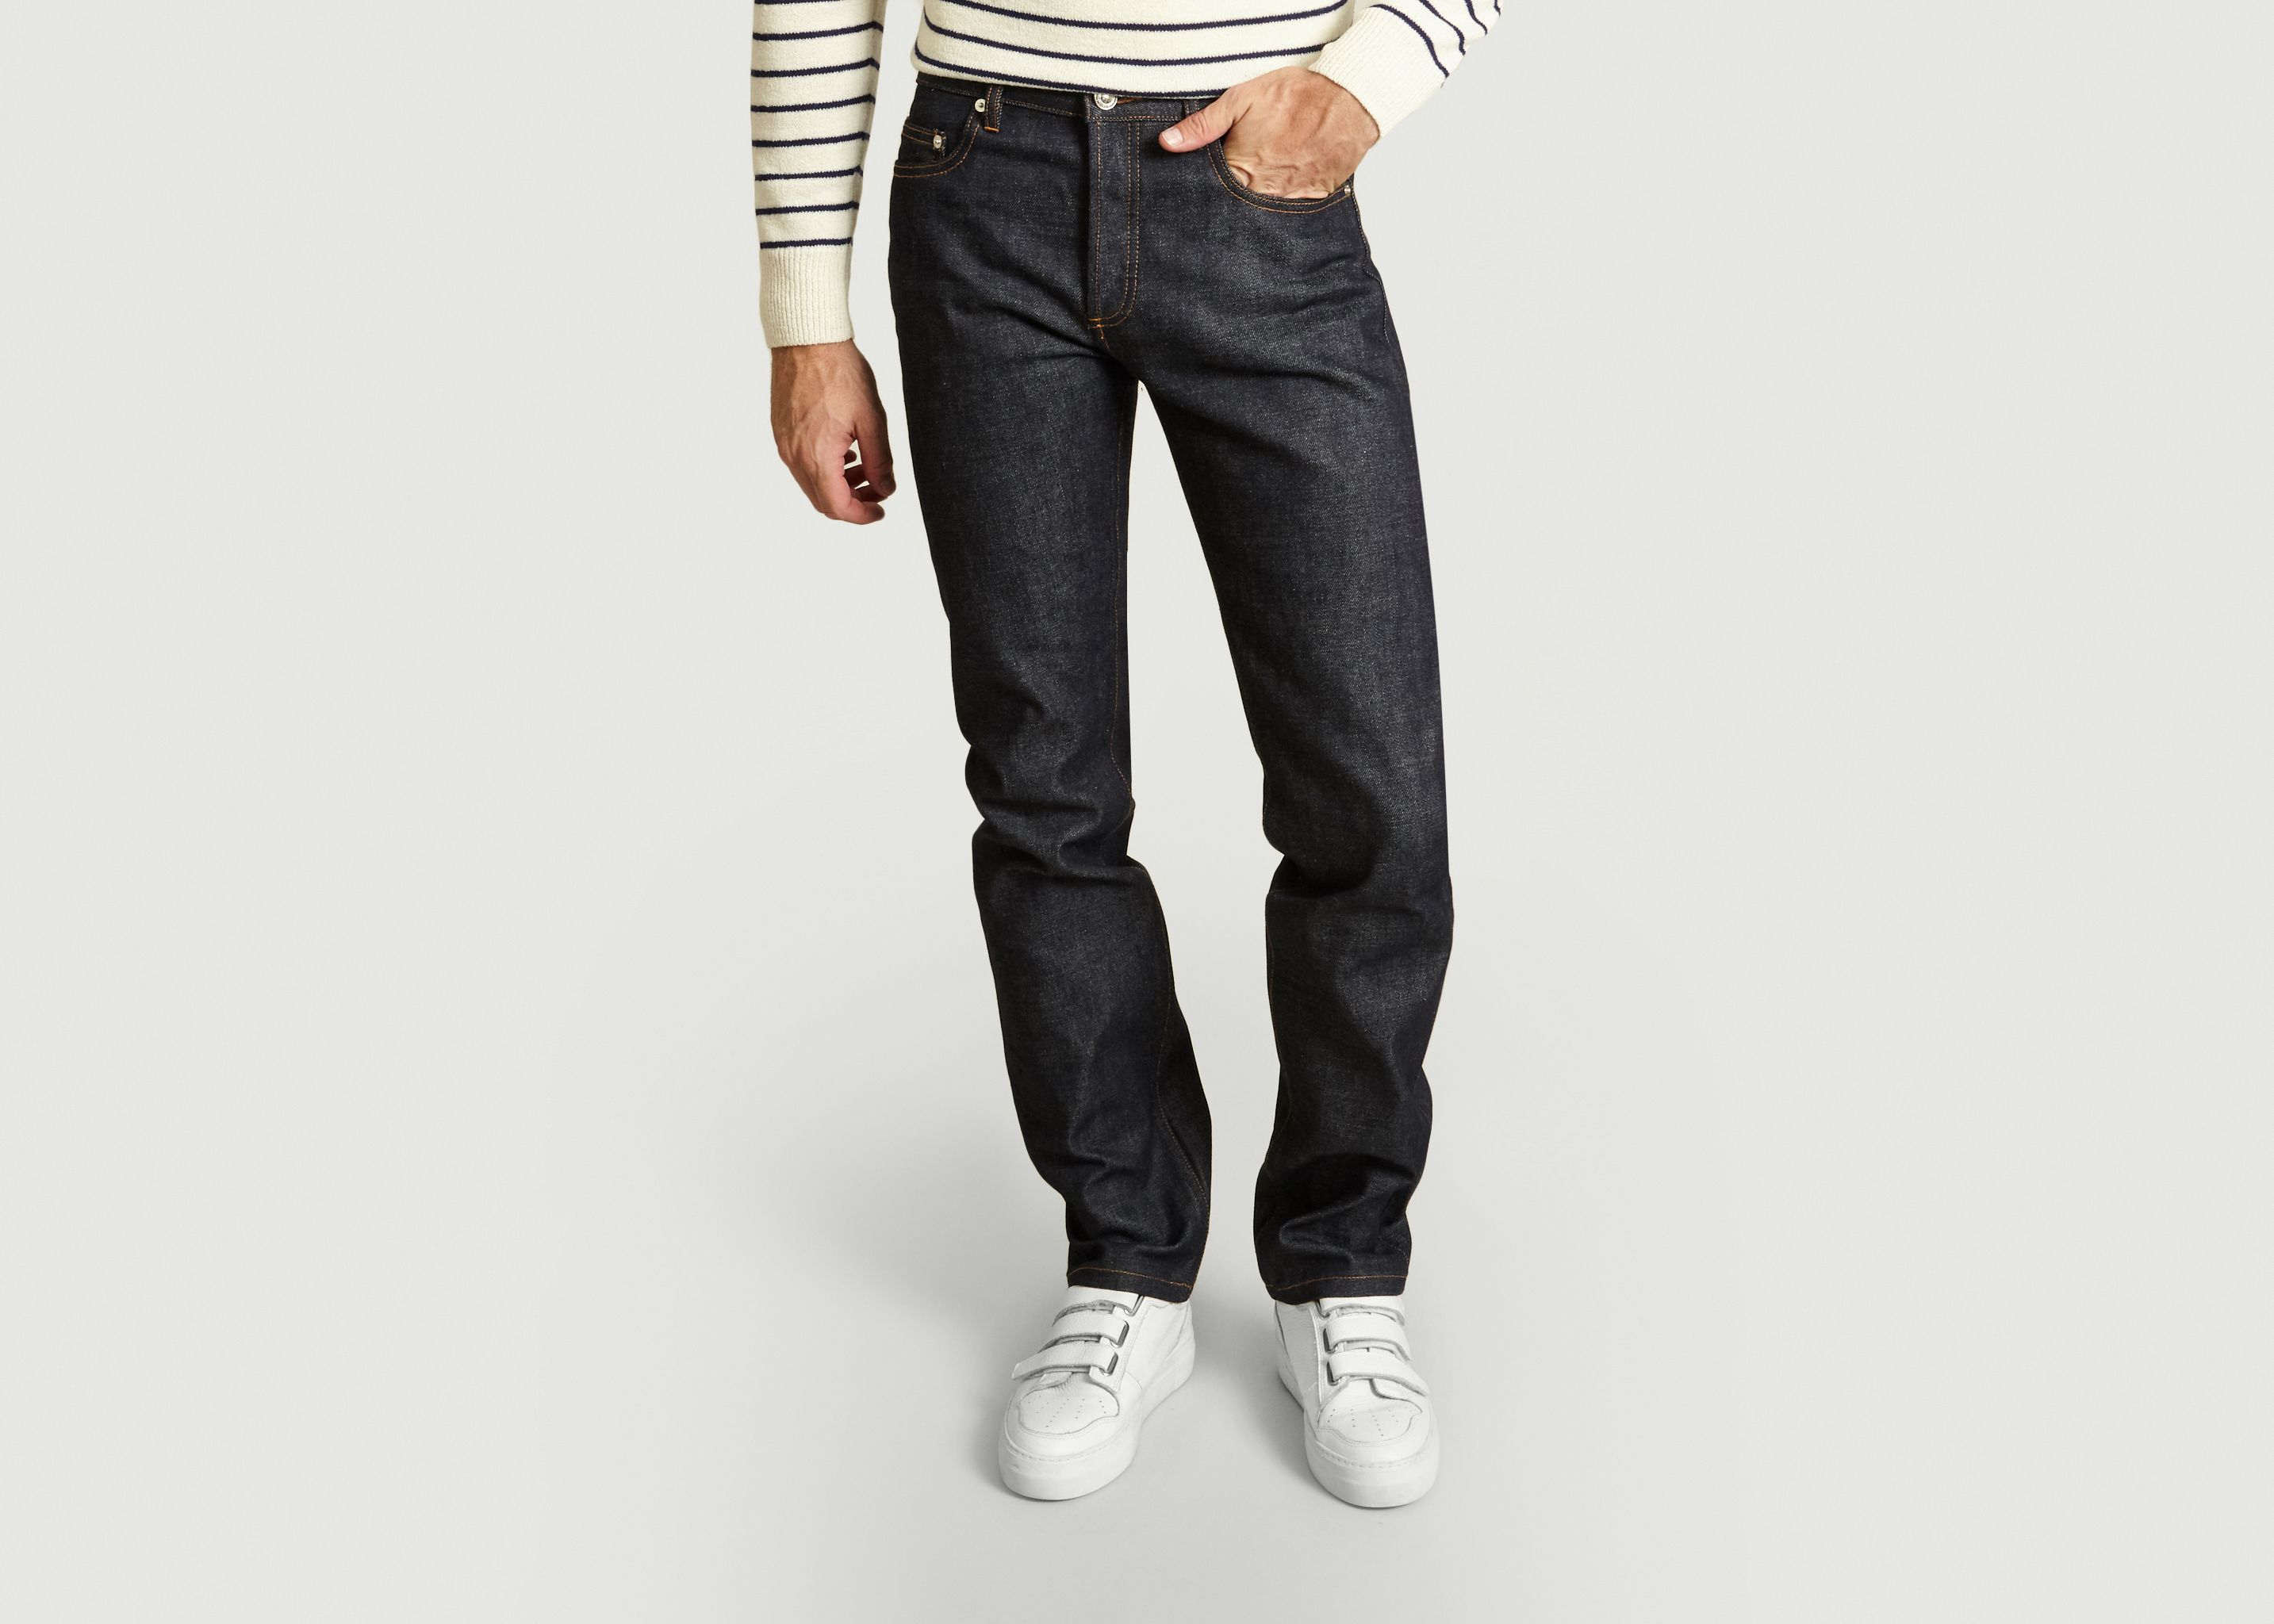 New Standard Denim Jeans - A.P.C.